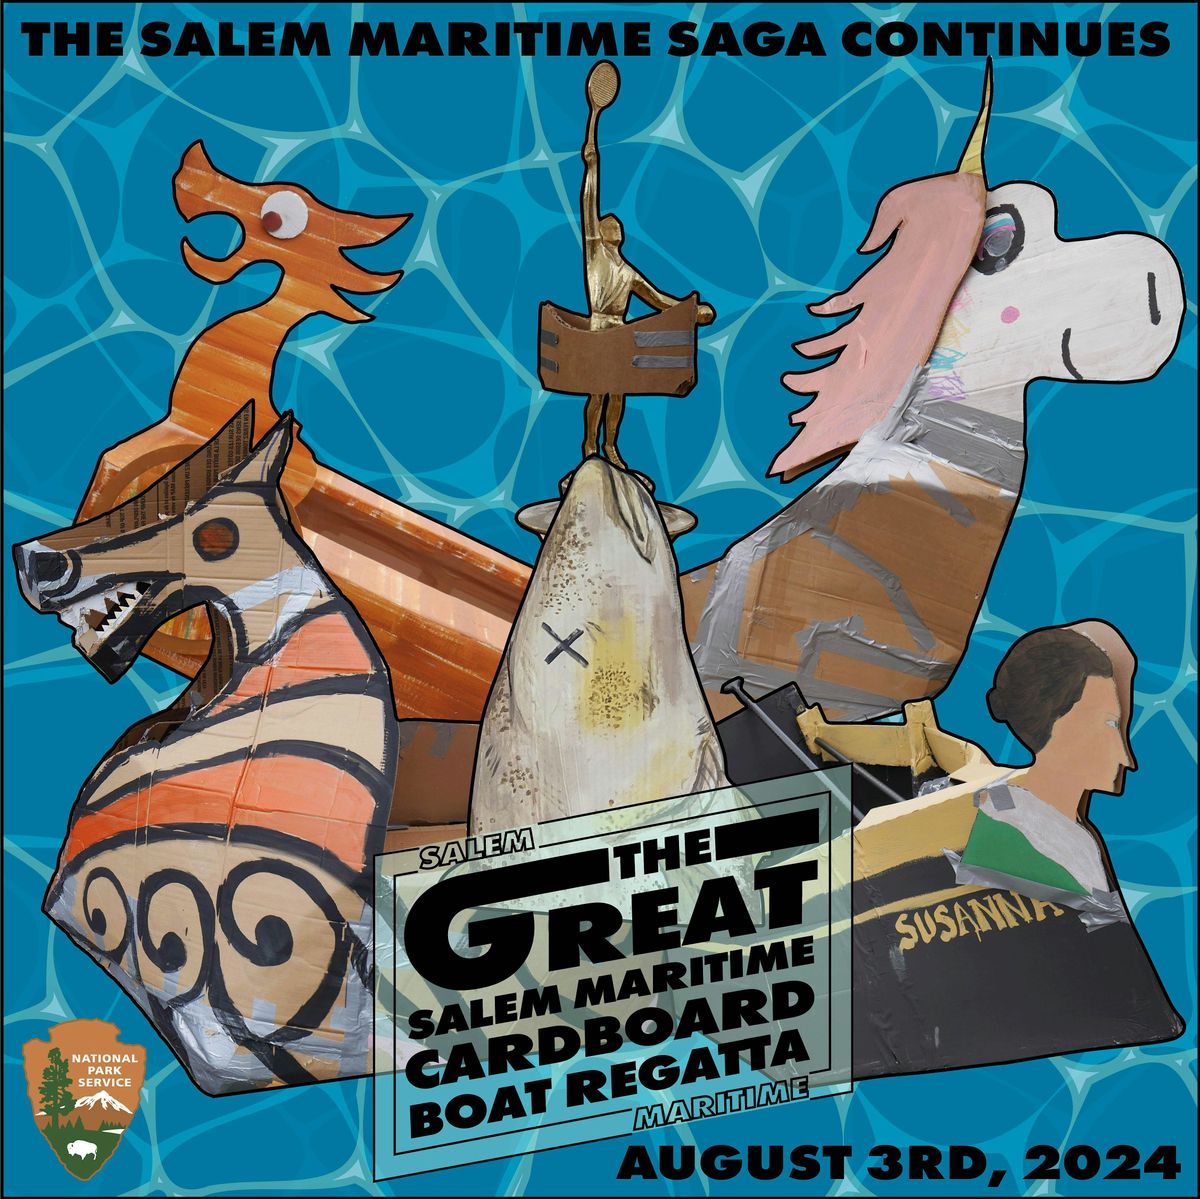 The Great Salem Maritime Cardboard Boat Regatta Strikes Back!